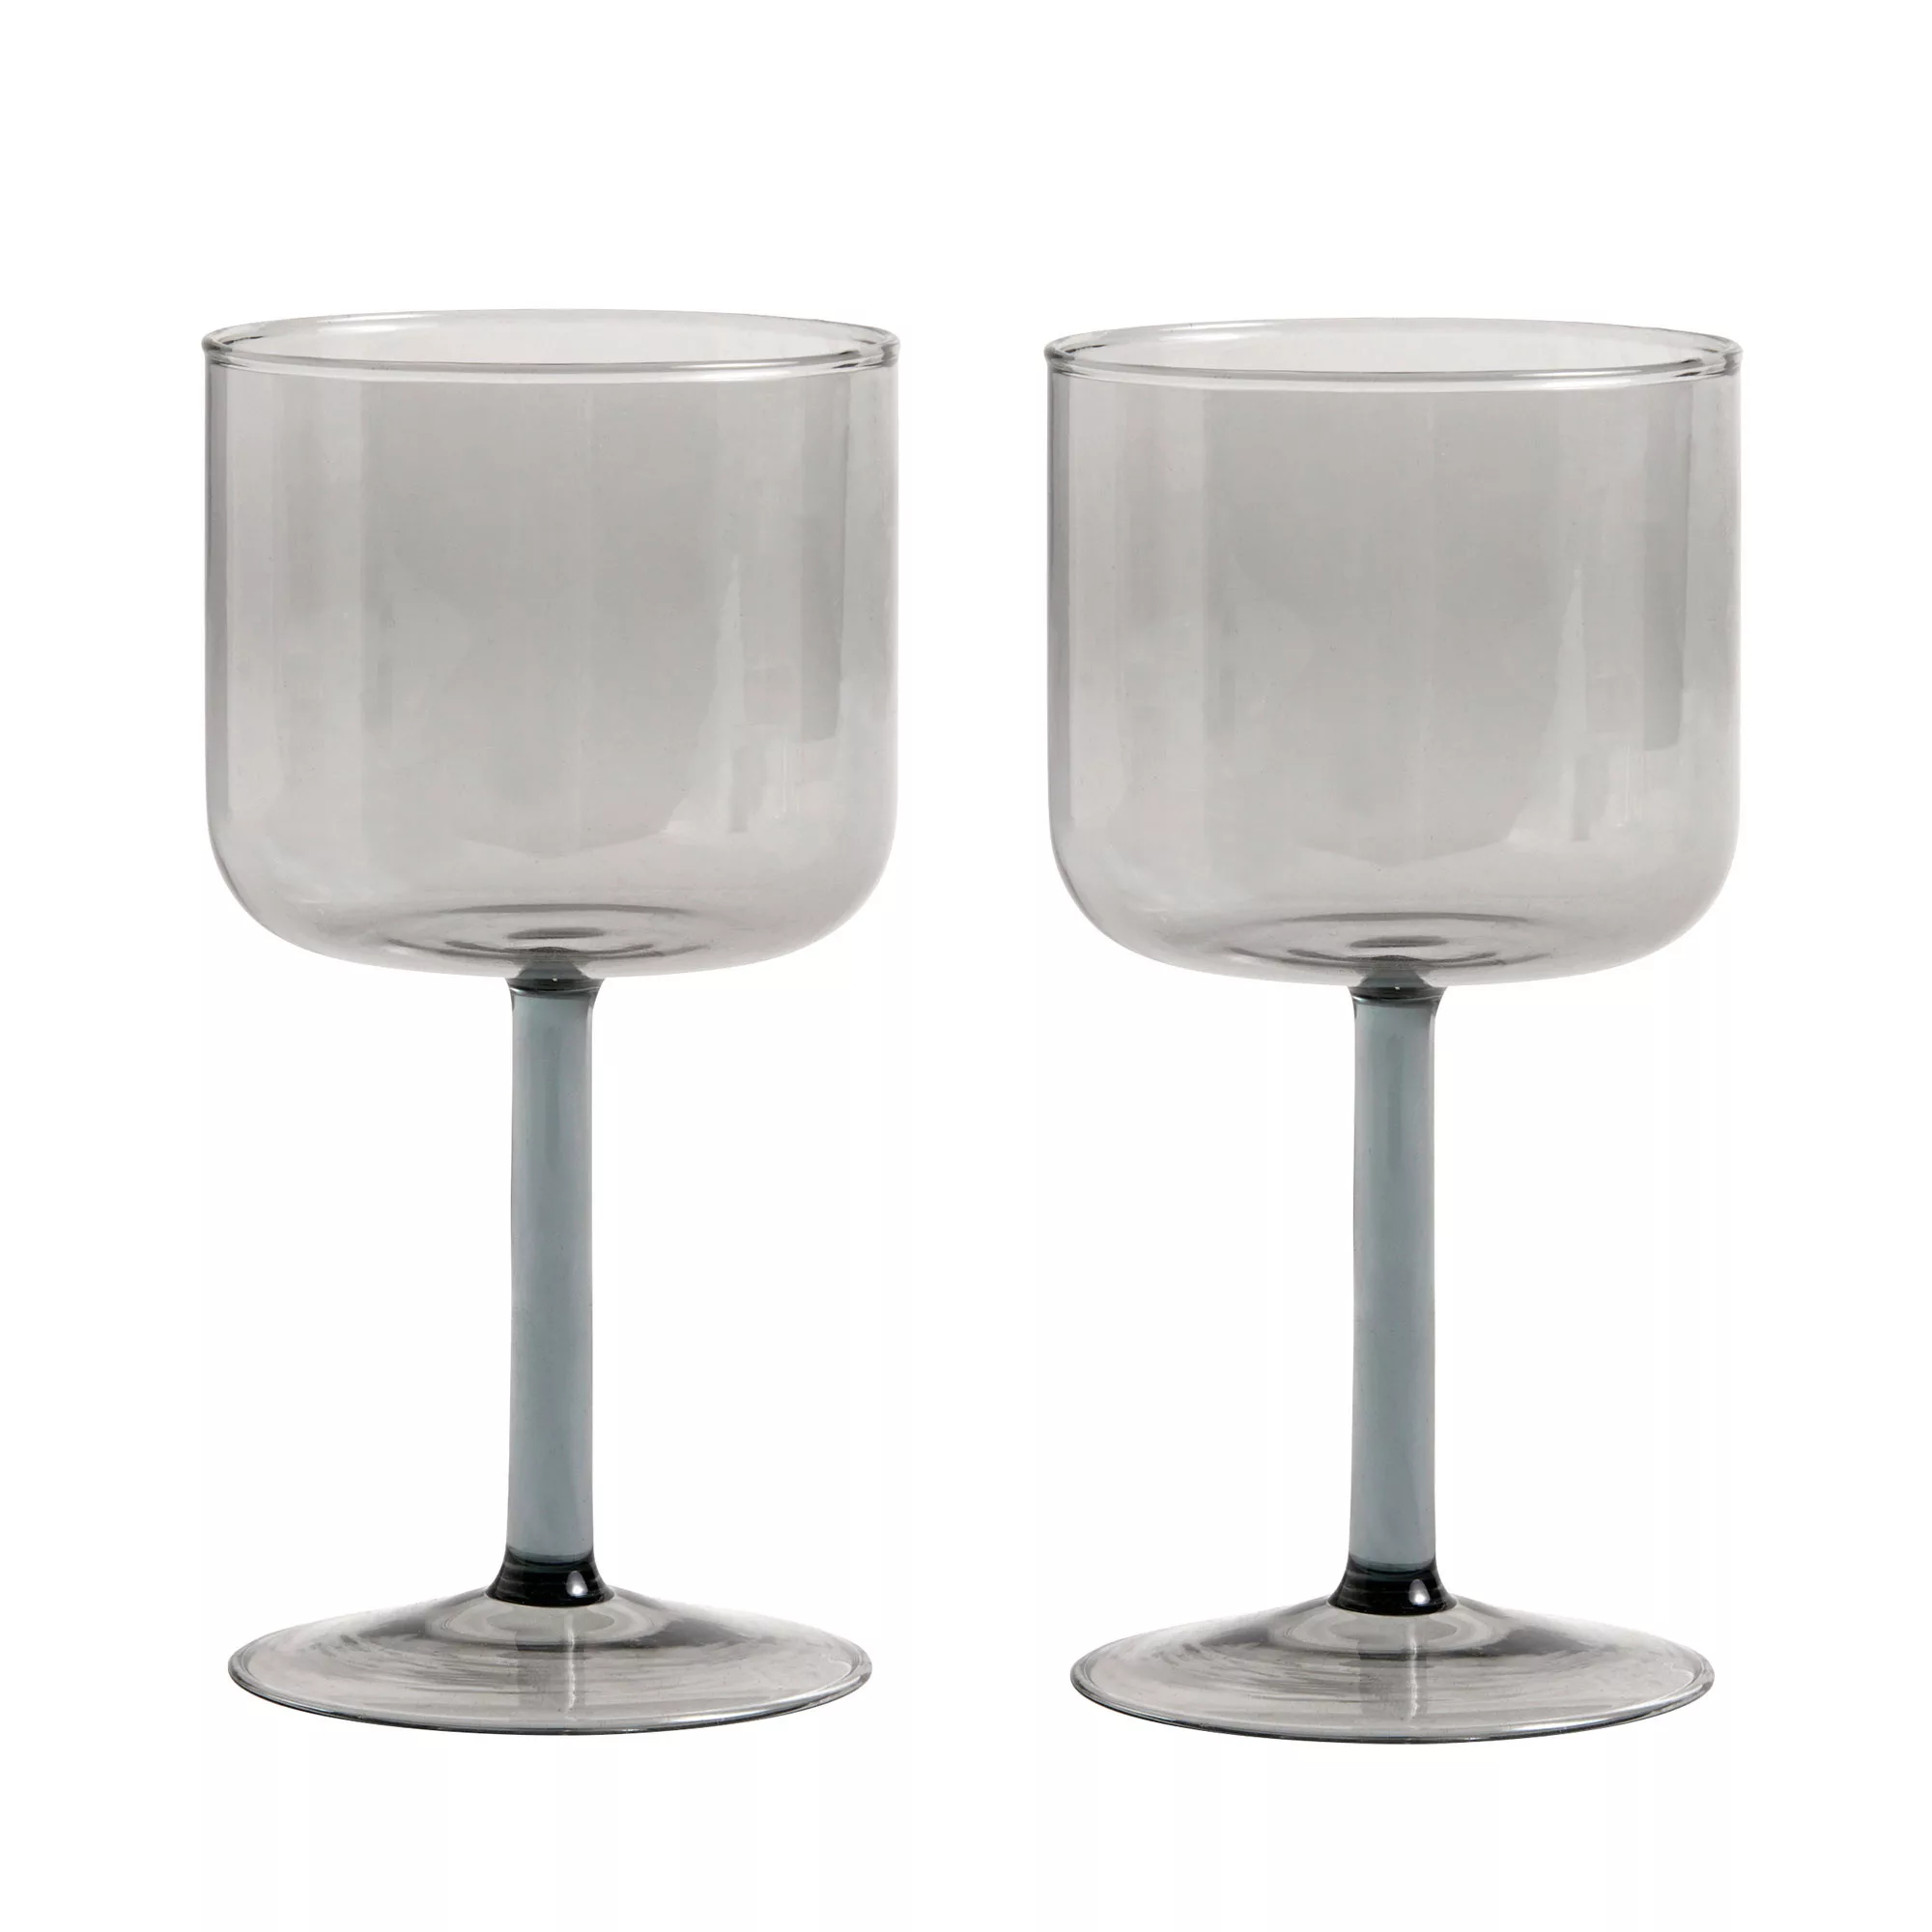 Weinglas Tint glas grau / 2er-Set - Hay - Grau günstig online kaufen